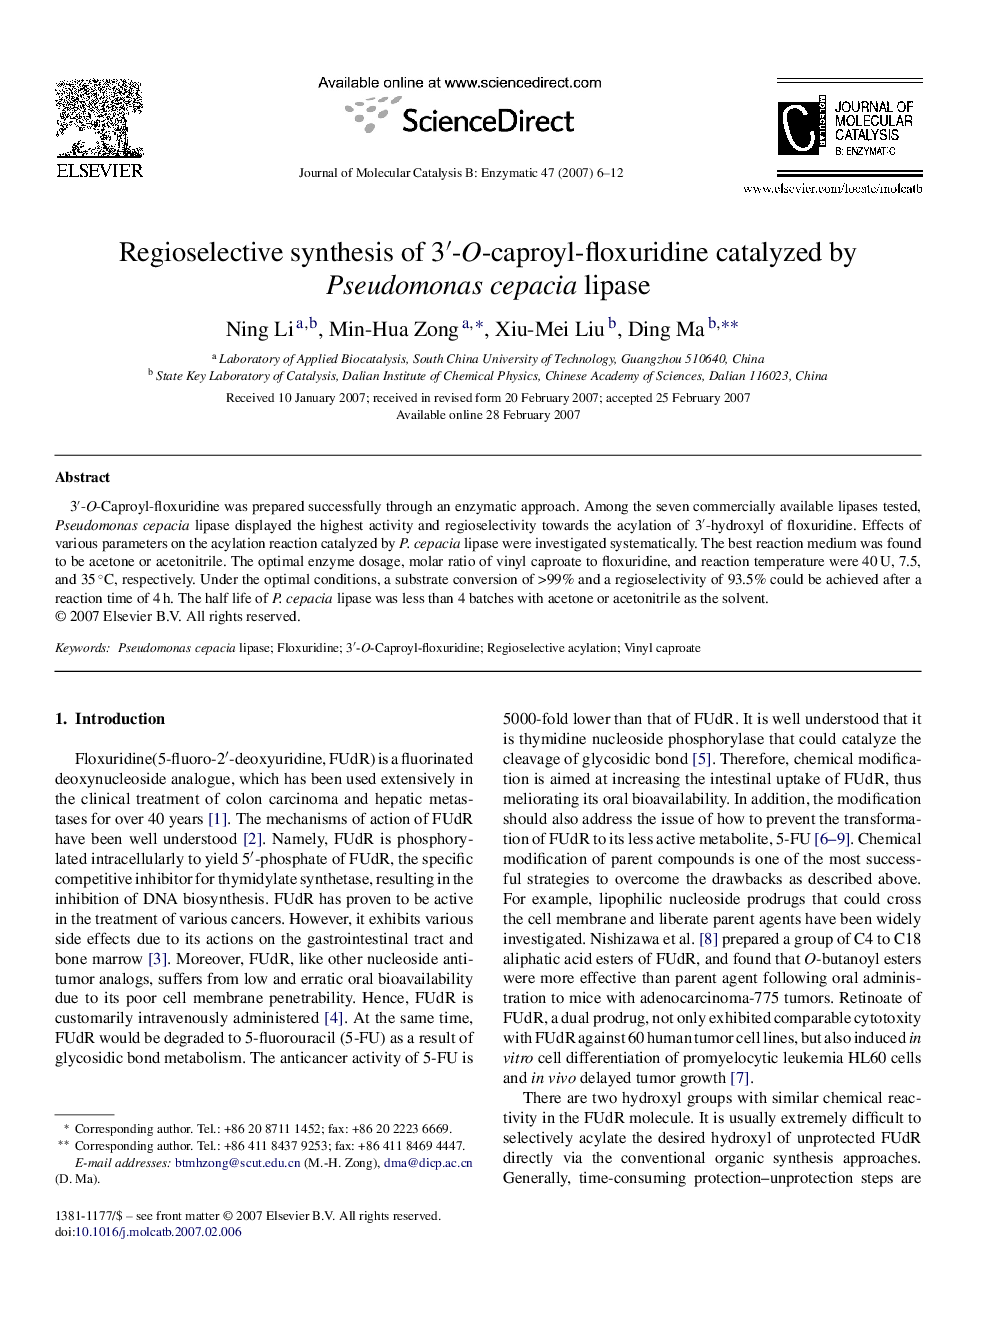 Regioselective synthesis of 3′-O-caproyl-floxuridine catalyzed by Pseudomonas cepacia lipase